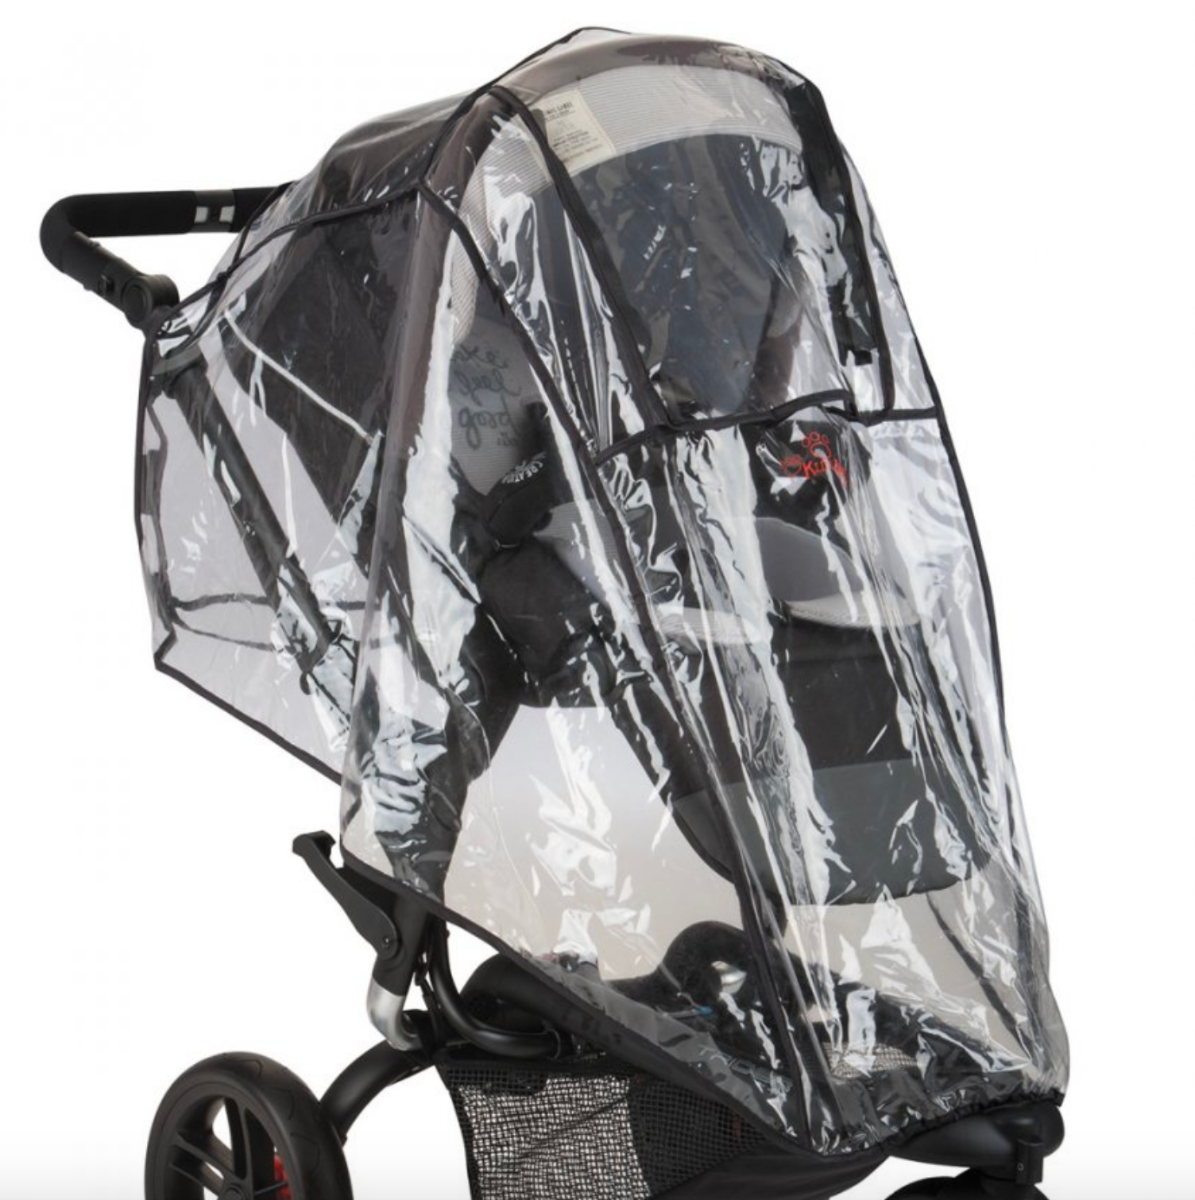 Protector de lluvia para coche universal de Jané – BabyStation